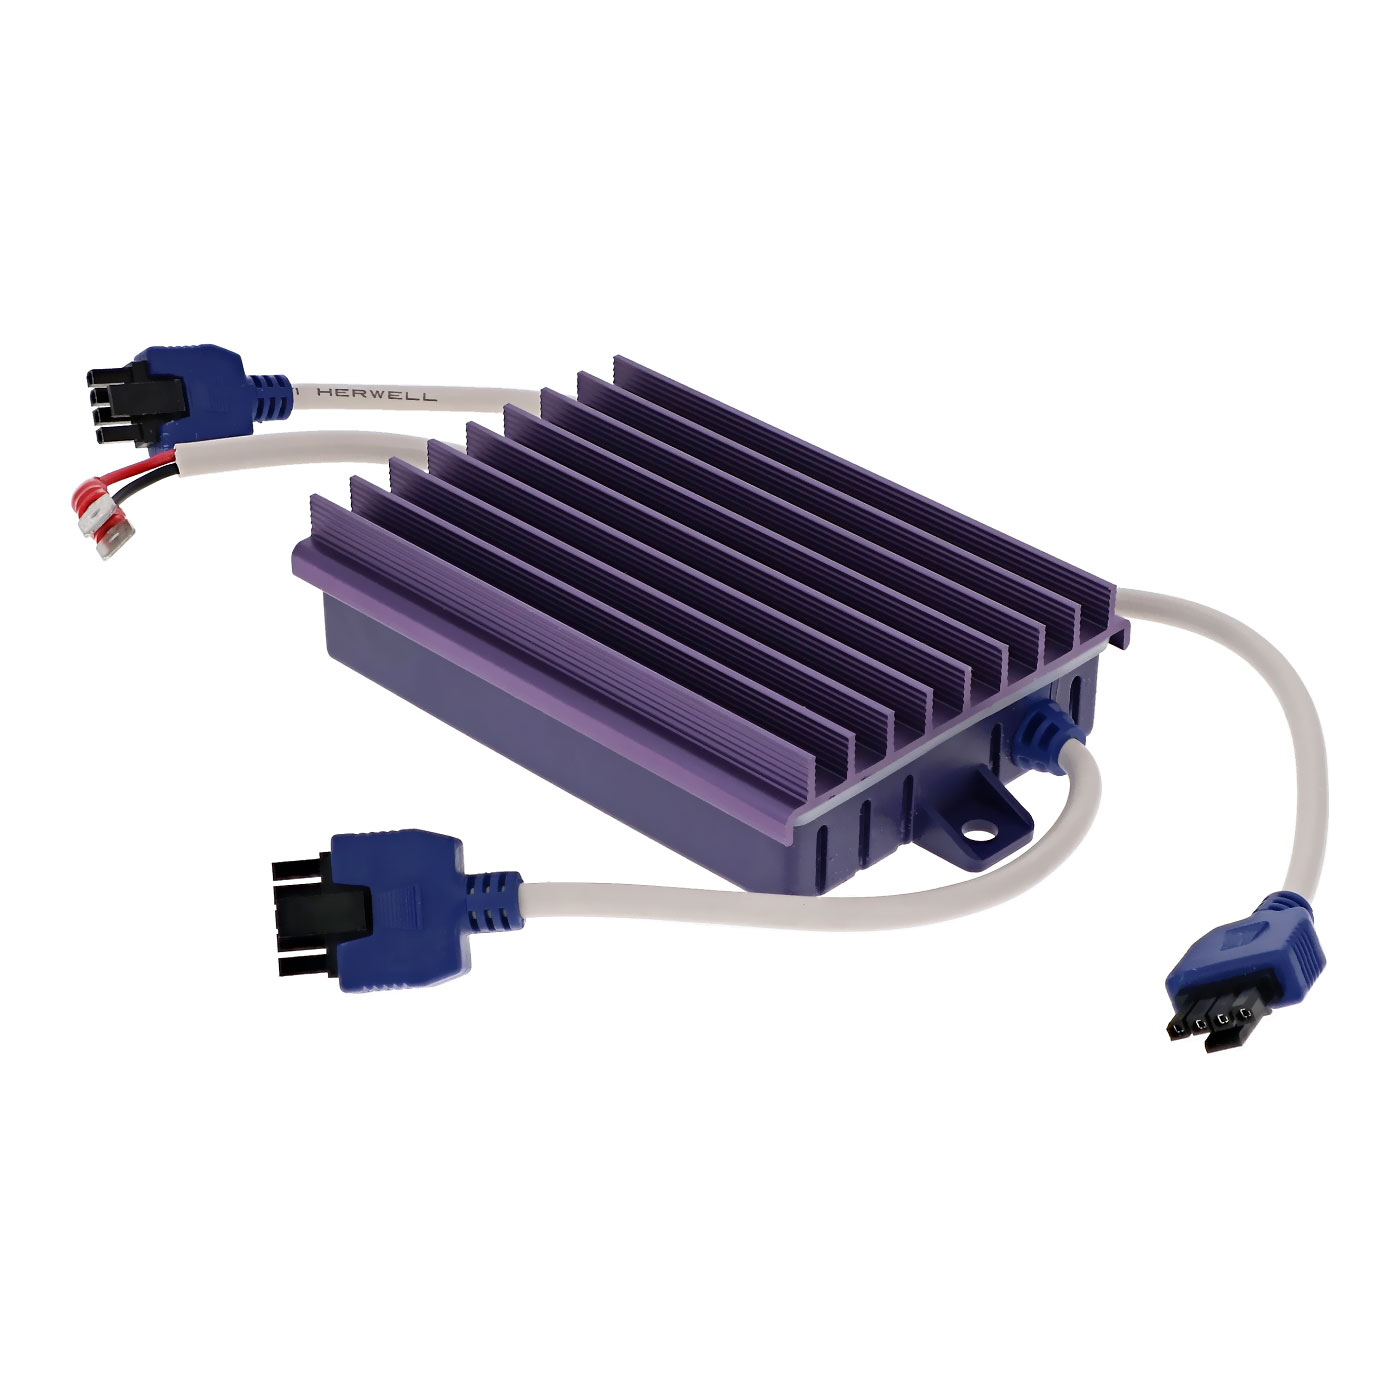 5-50-2D LED Connector Box